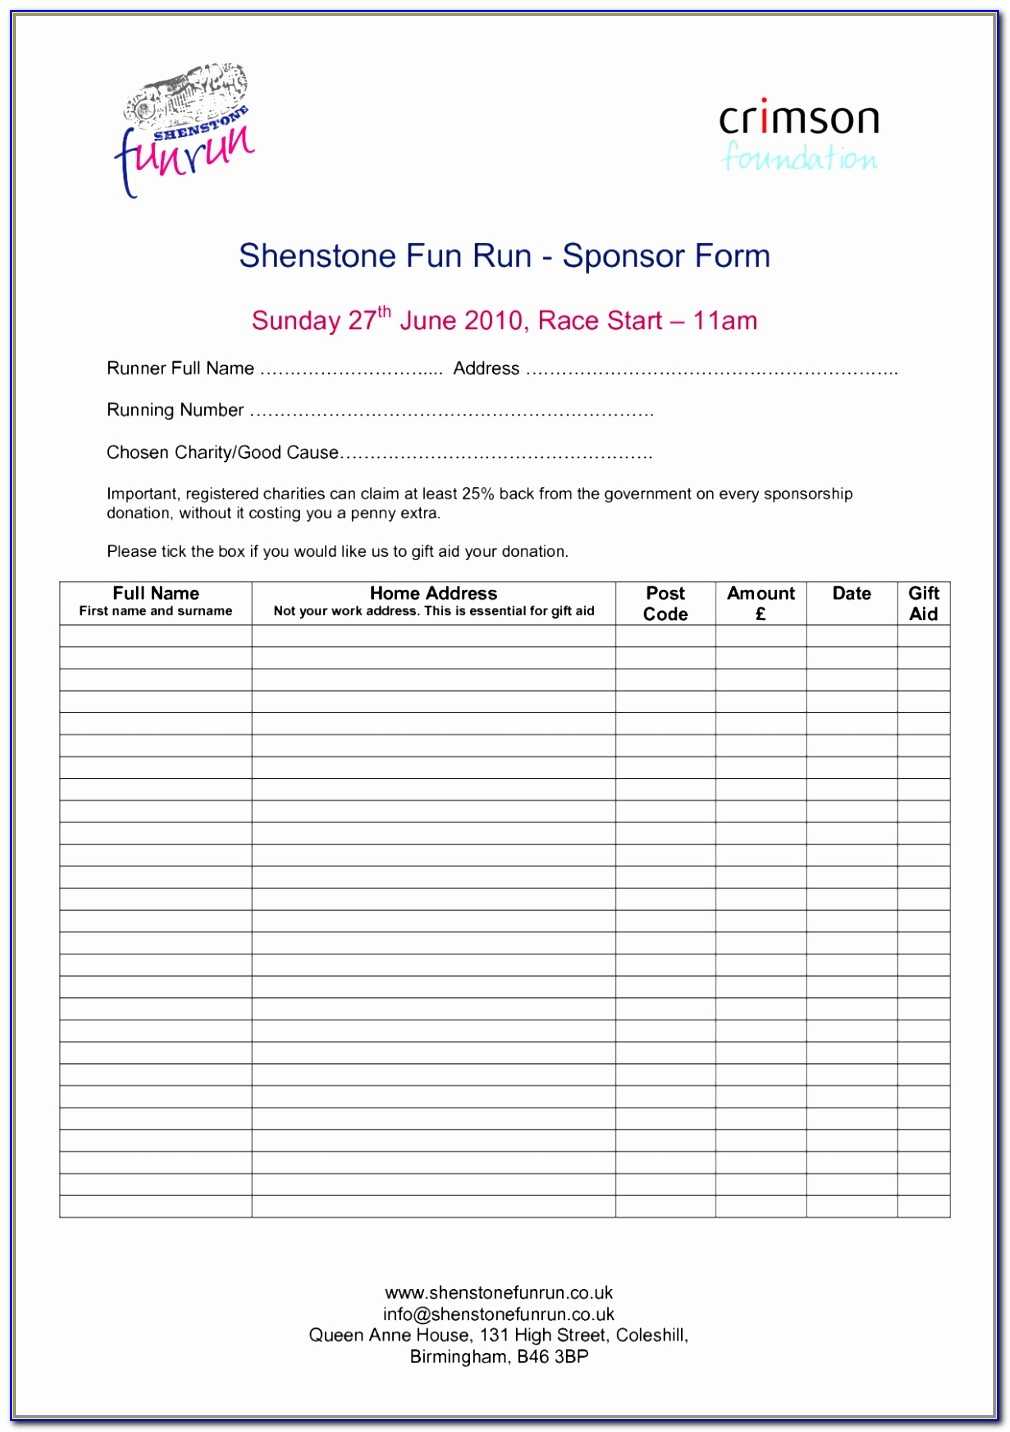 Sample Sponsorship Form Informatics Pharmacist Sample Resume In Blank Sponsor Form Template Free